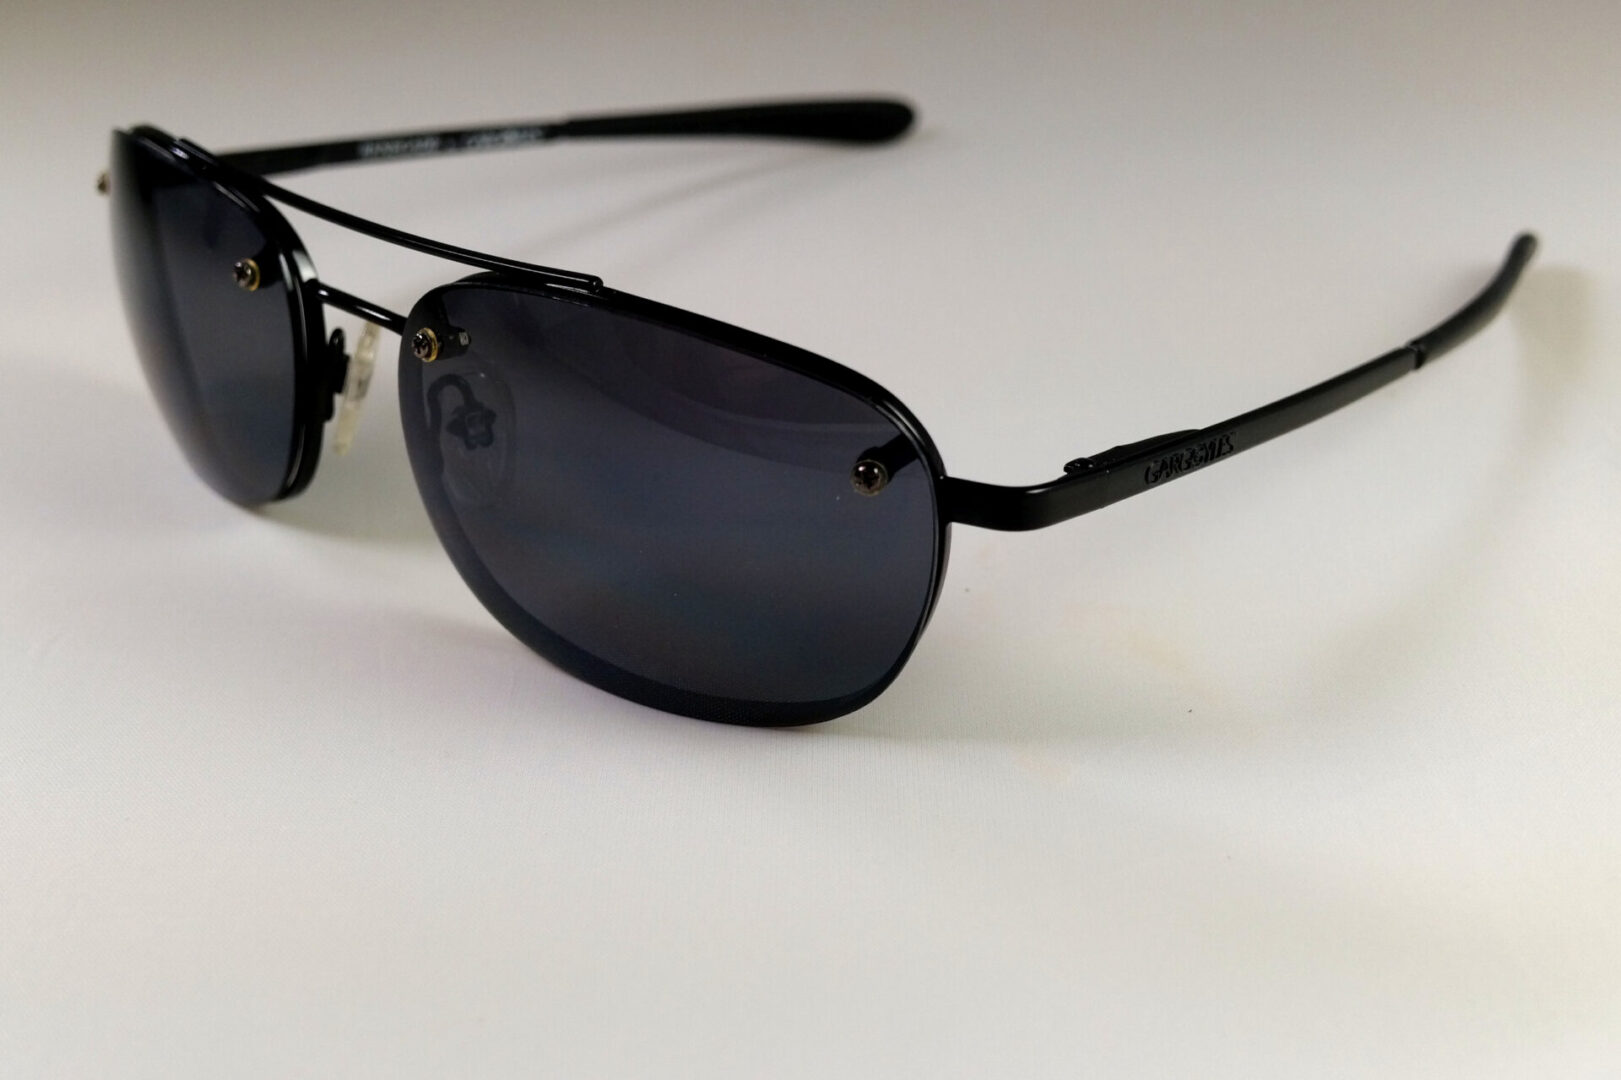 A pair of black sunglasses